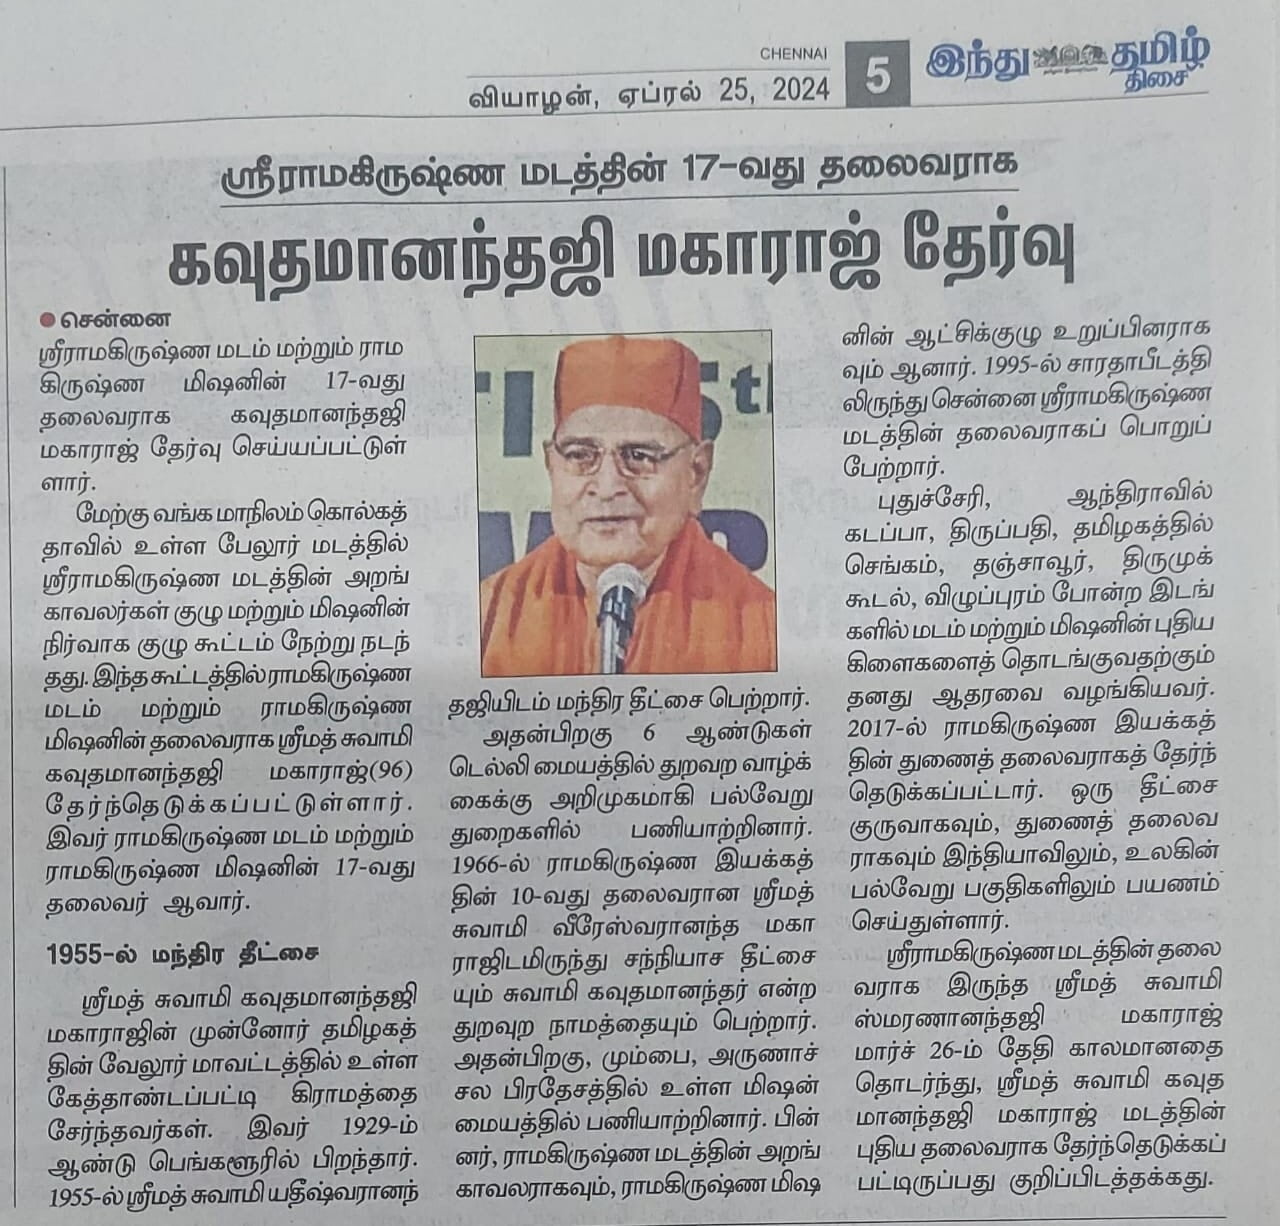 Swami Gautamananda Elected as 17th President of Ramakrishna Math - Hindu Tamizh News Report